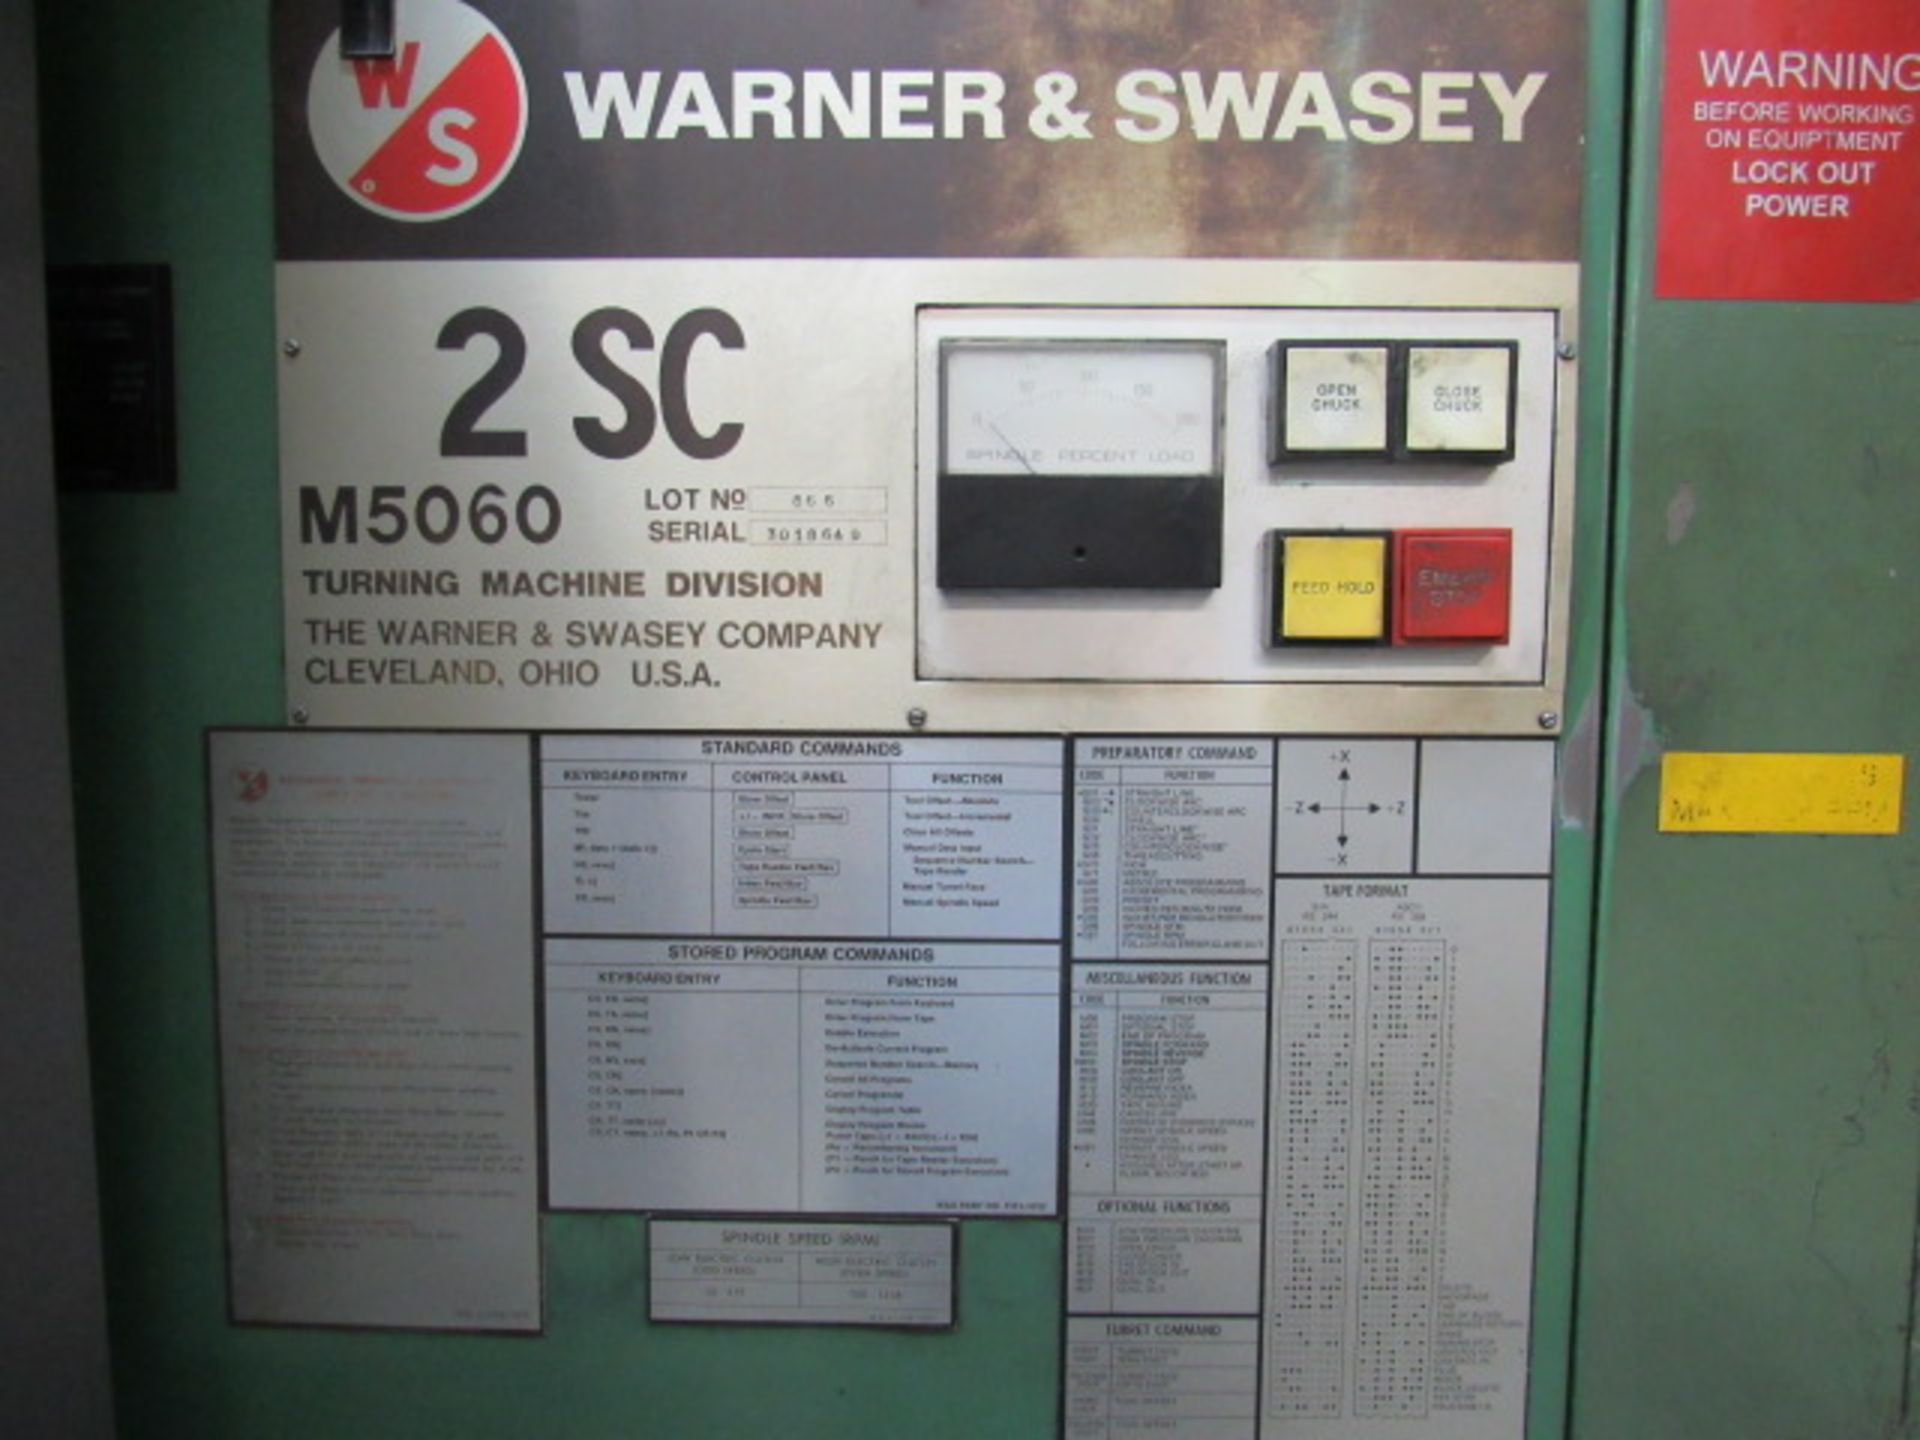 Warner & Swasey 2 SC M5060 CNC Lathe - Image 7 of 7